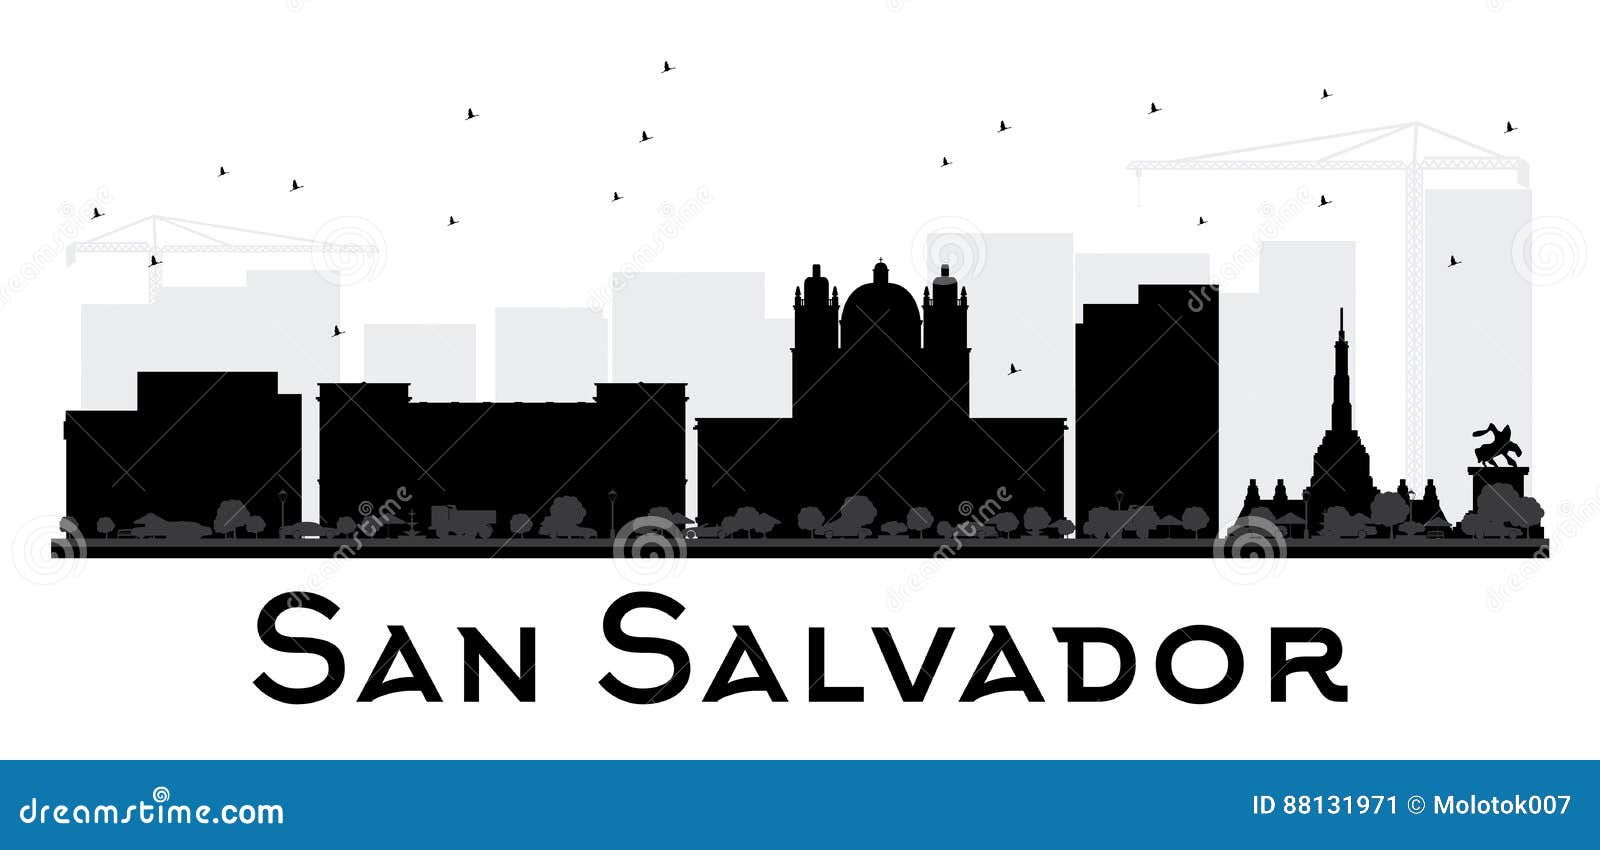 san salvador city skyline black and white silhouette.